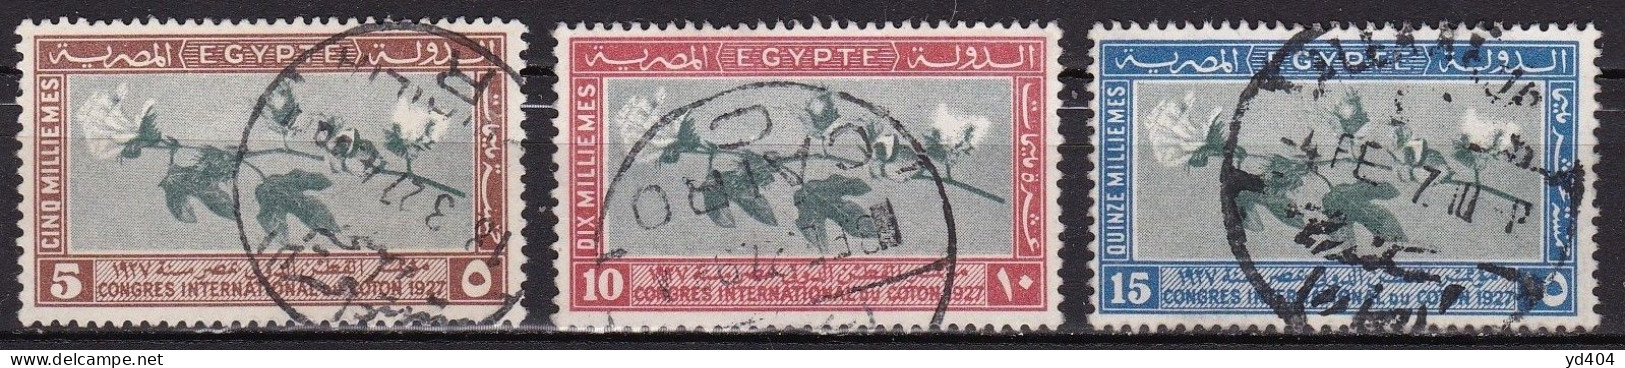 EG061 – EGYPTE – EGYPT – 1927 – INTERNATIONAL COTTON CONGRESS - Y&T # 115/117 USED - Oblitérés